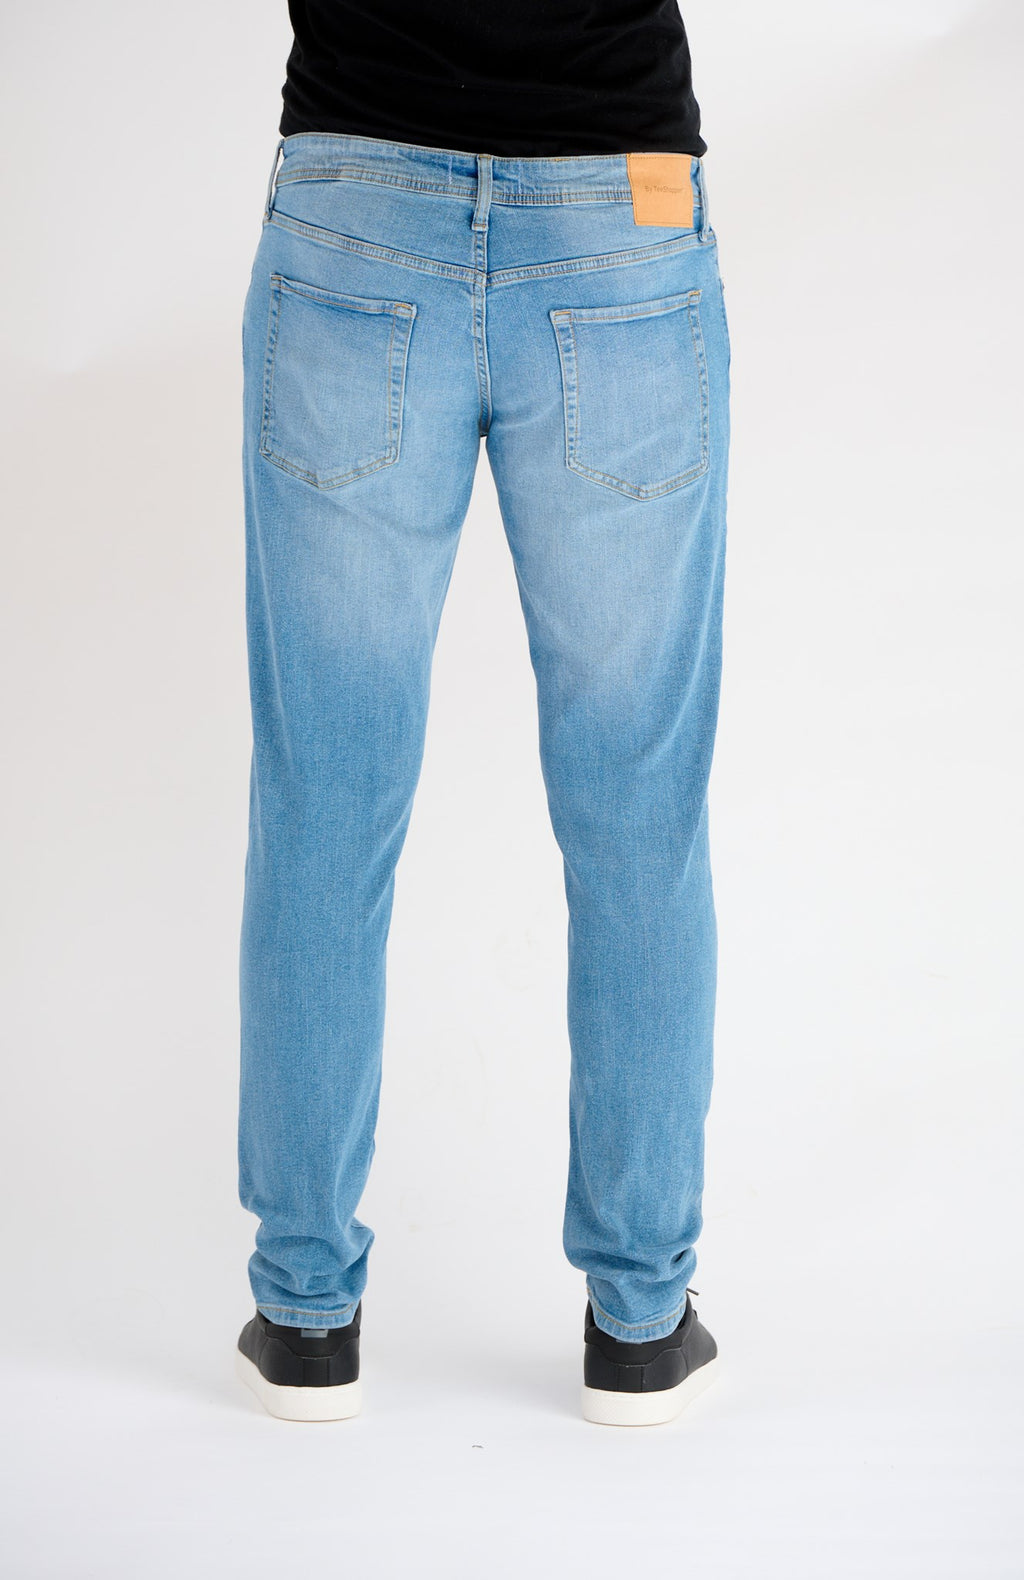 De Originale Performance Jeans (Slim) - Light Blue Denim